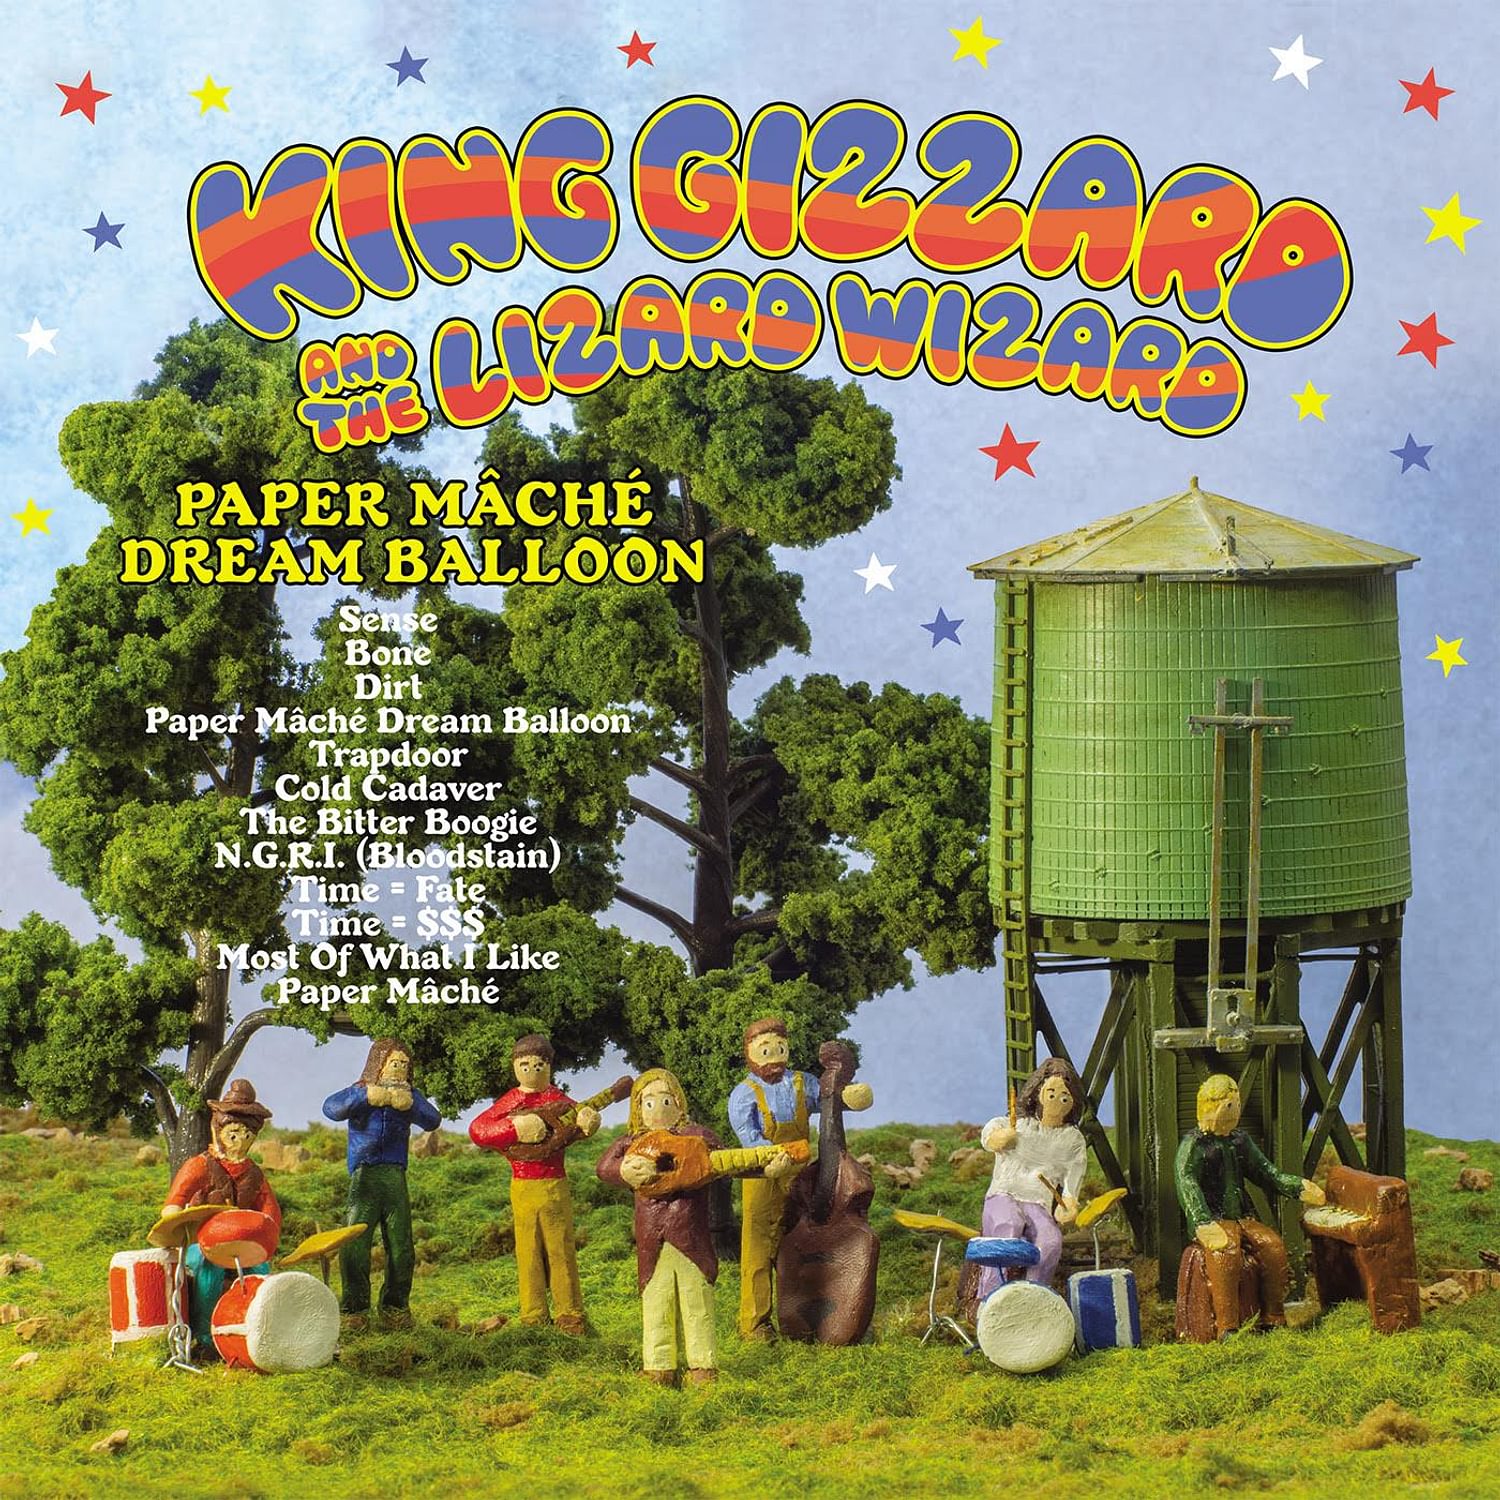 King Gizzard and the Lizard Wizard - Paper Maché Dream Balloon